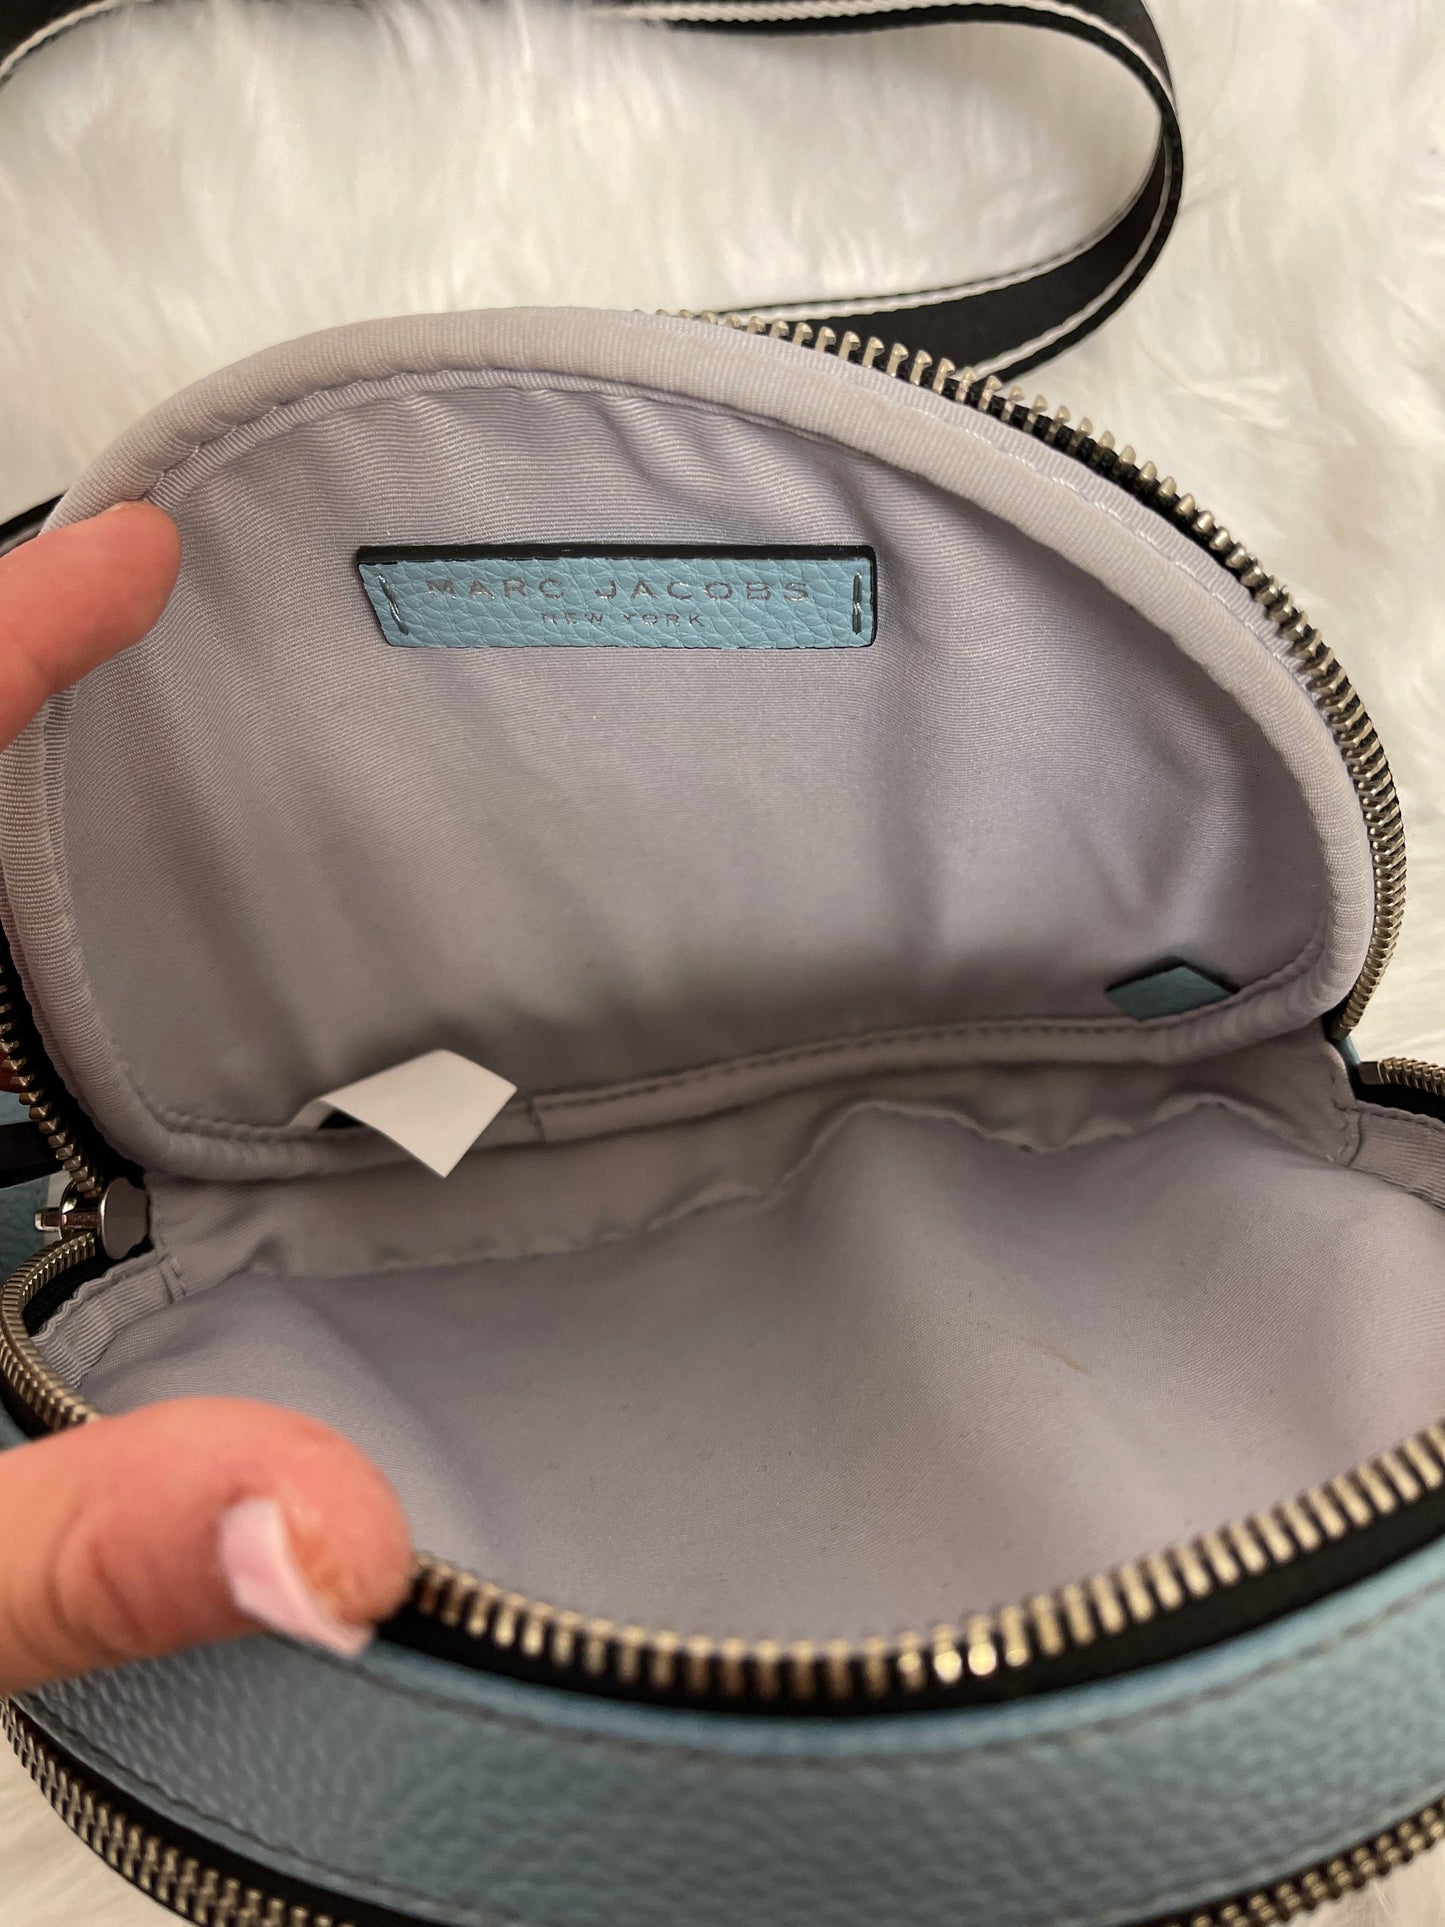 Handbag Luxury Designer Marc Jacobs, Size Small